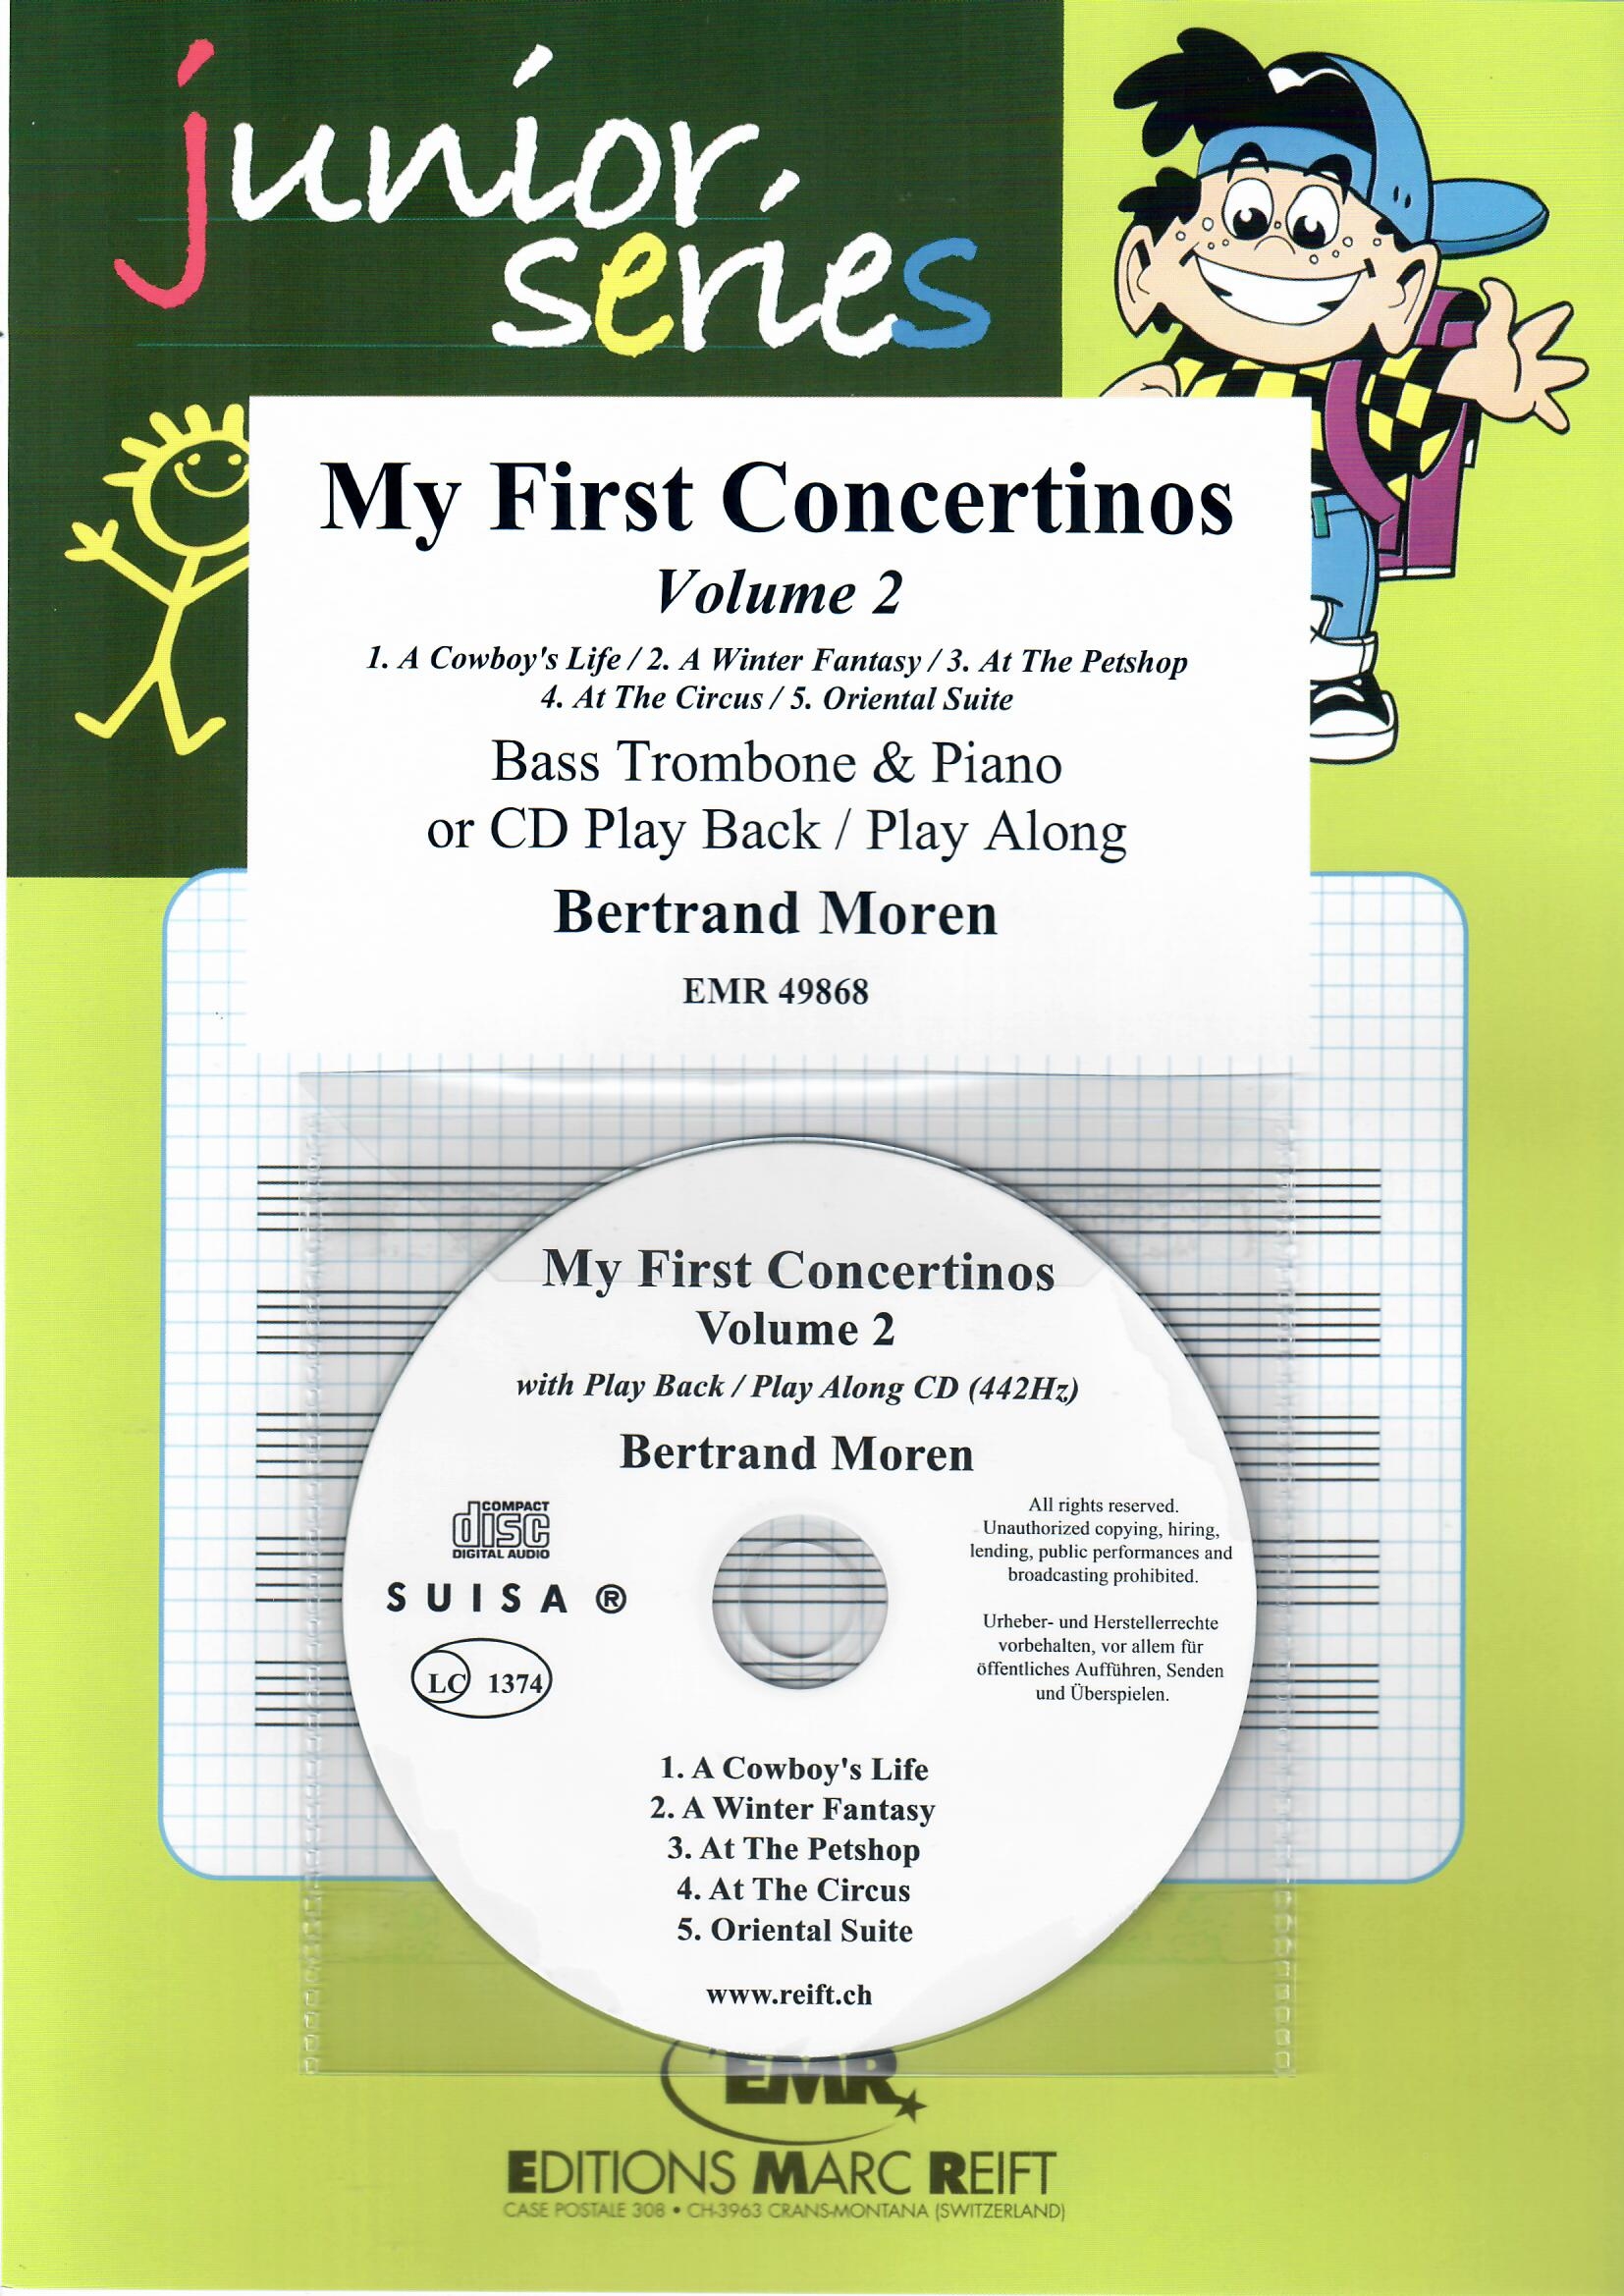 MY FIRST CONCERTINOS VOLUME 2 - Bass Trombone & Piano